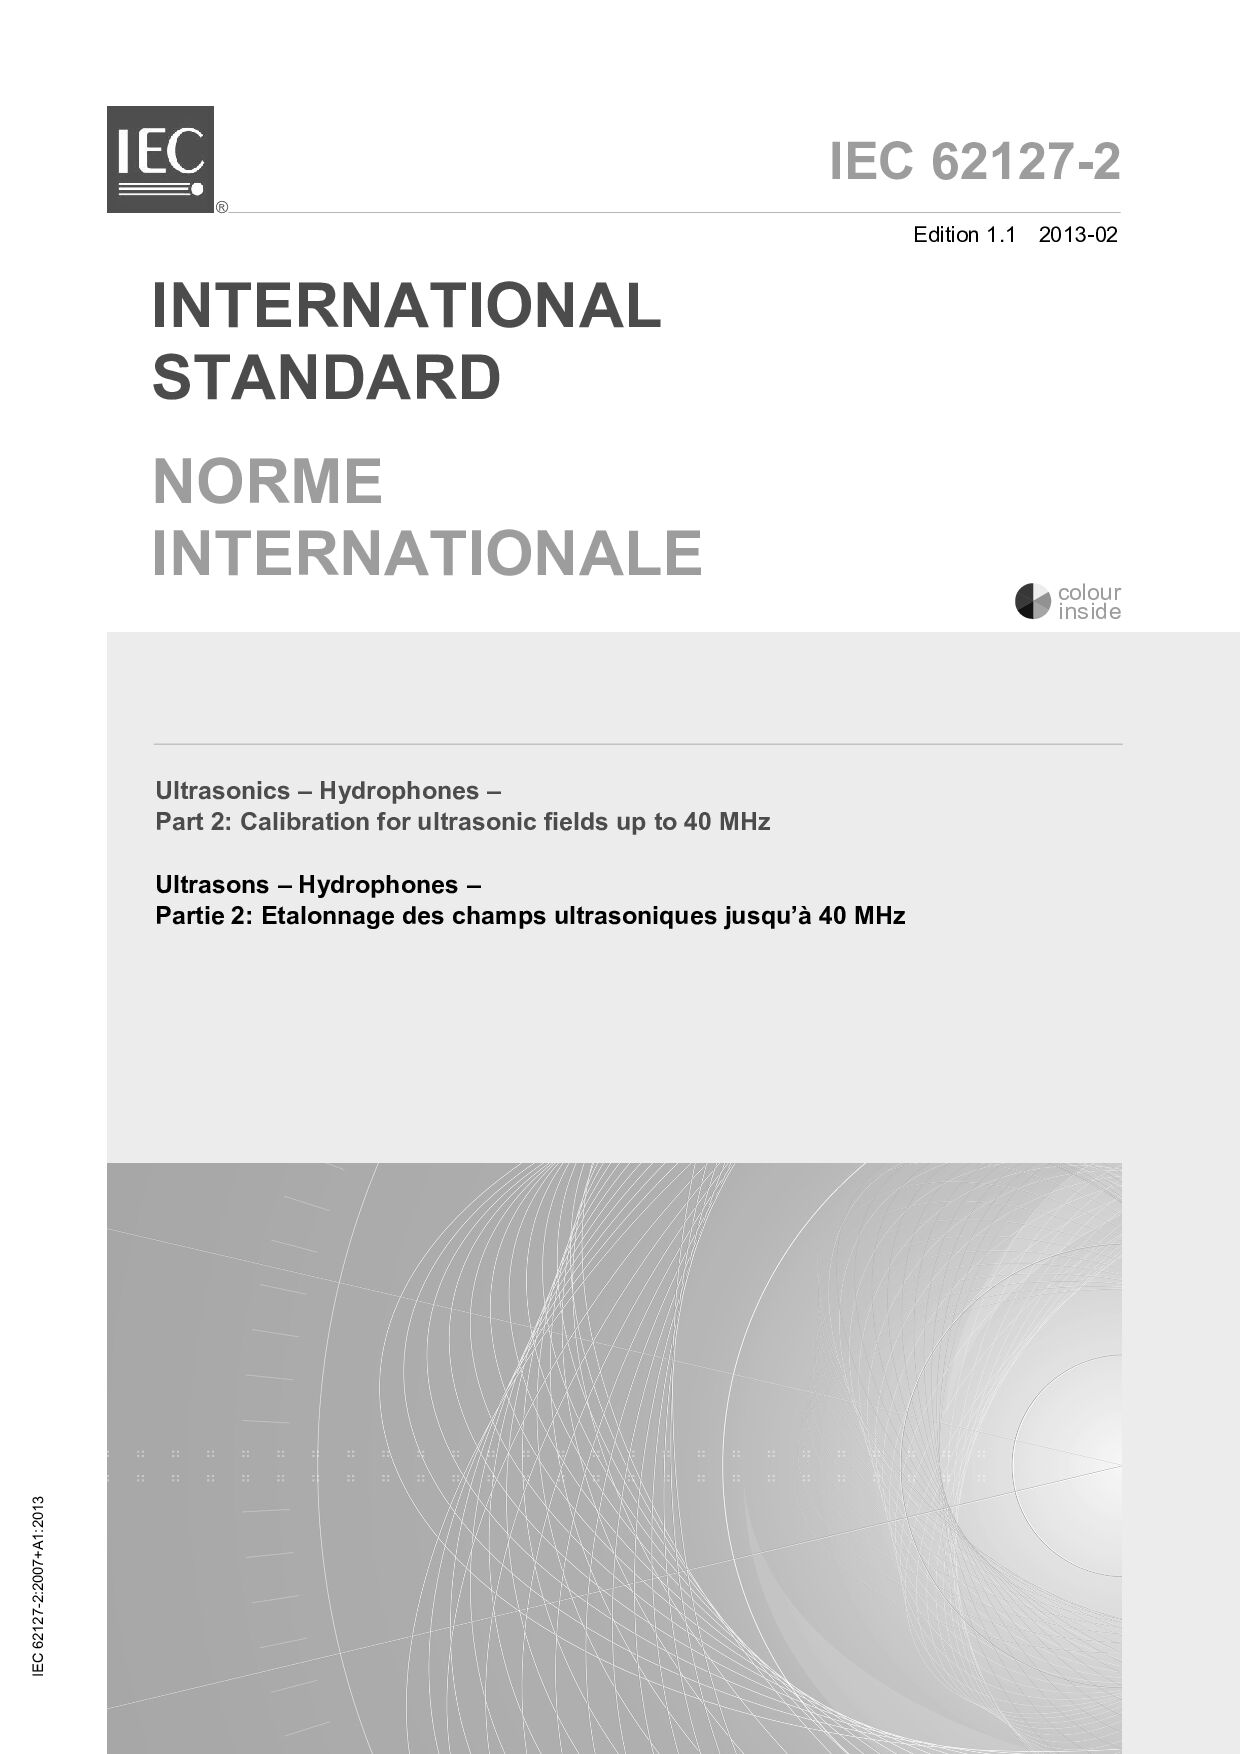 IEC 62127-2 Edition 1.1-2013